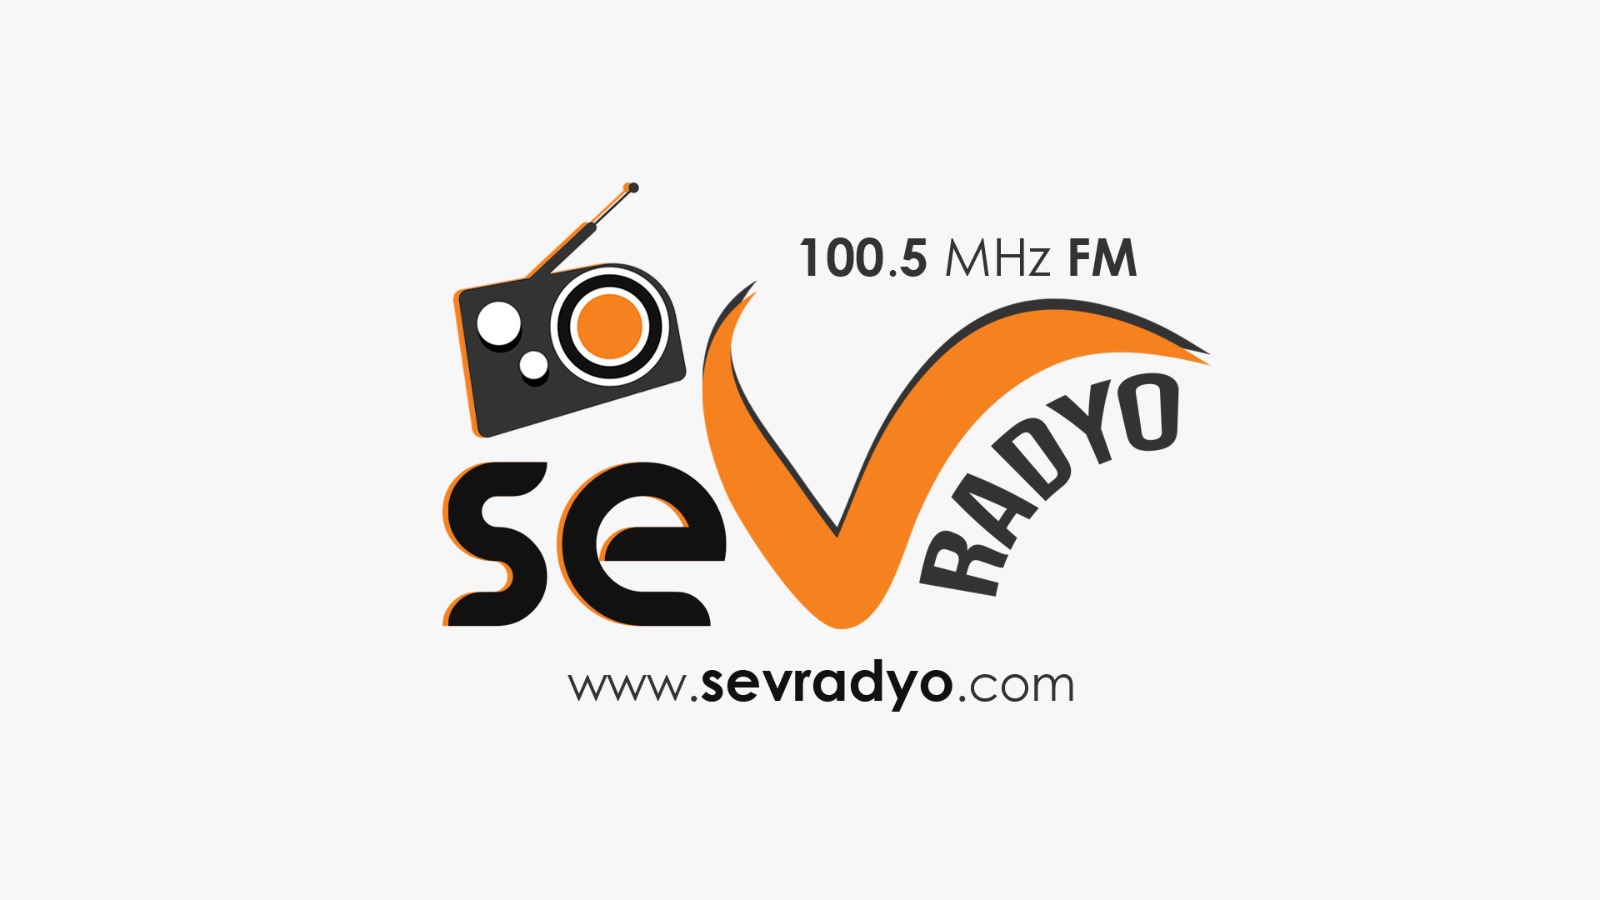 SEV RADYO FM 100.5 MHz